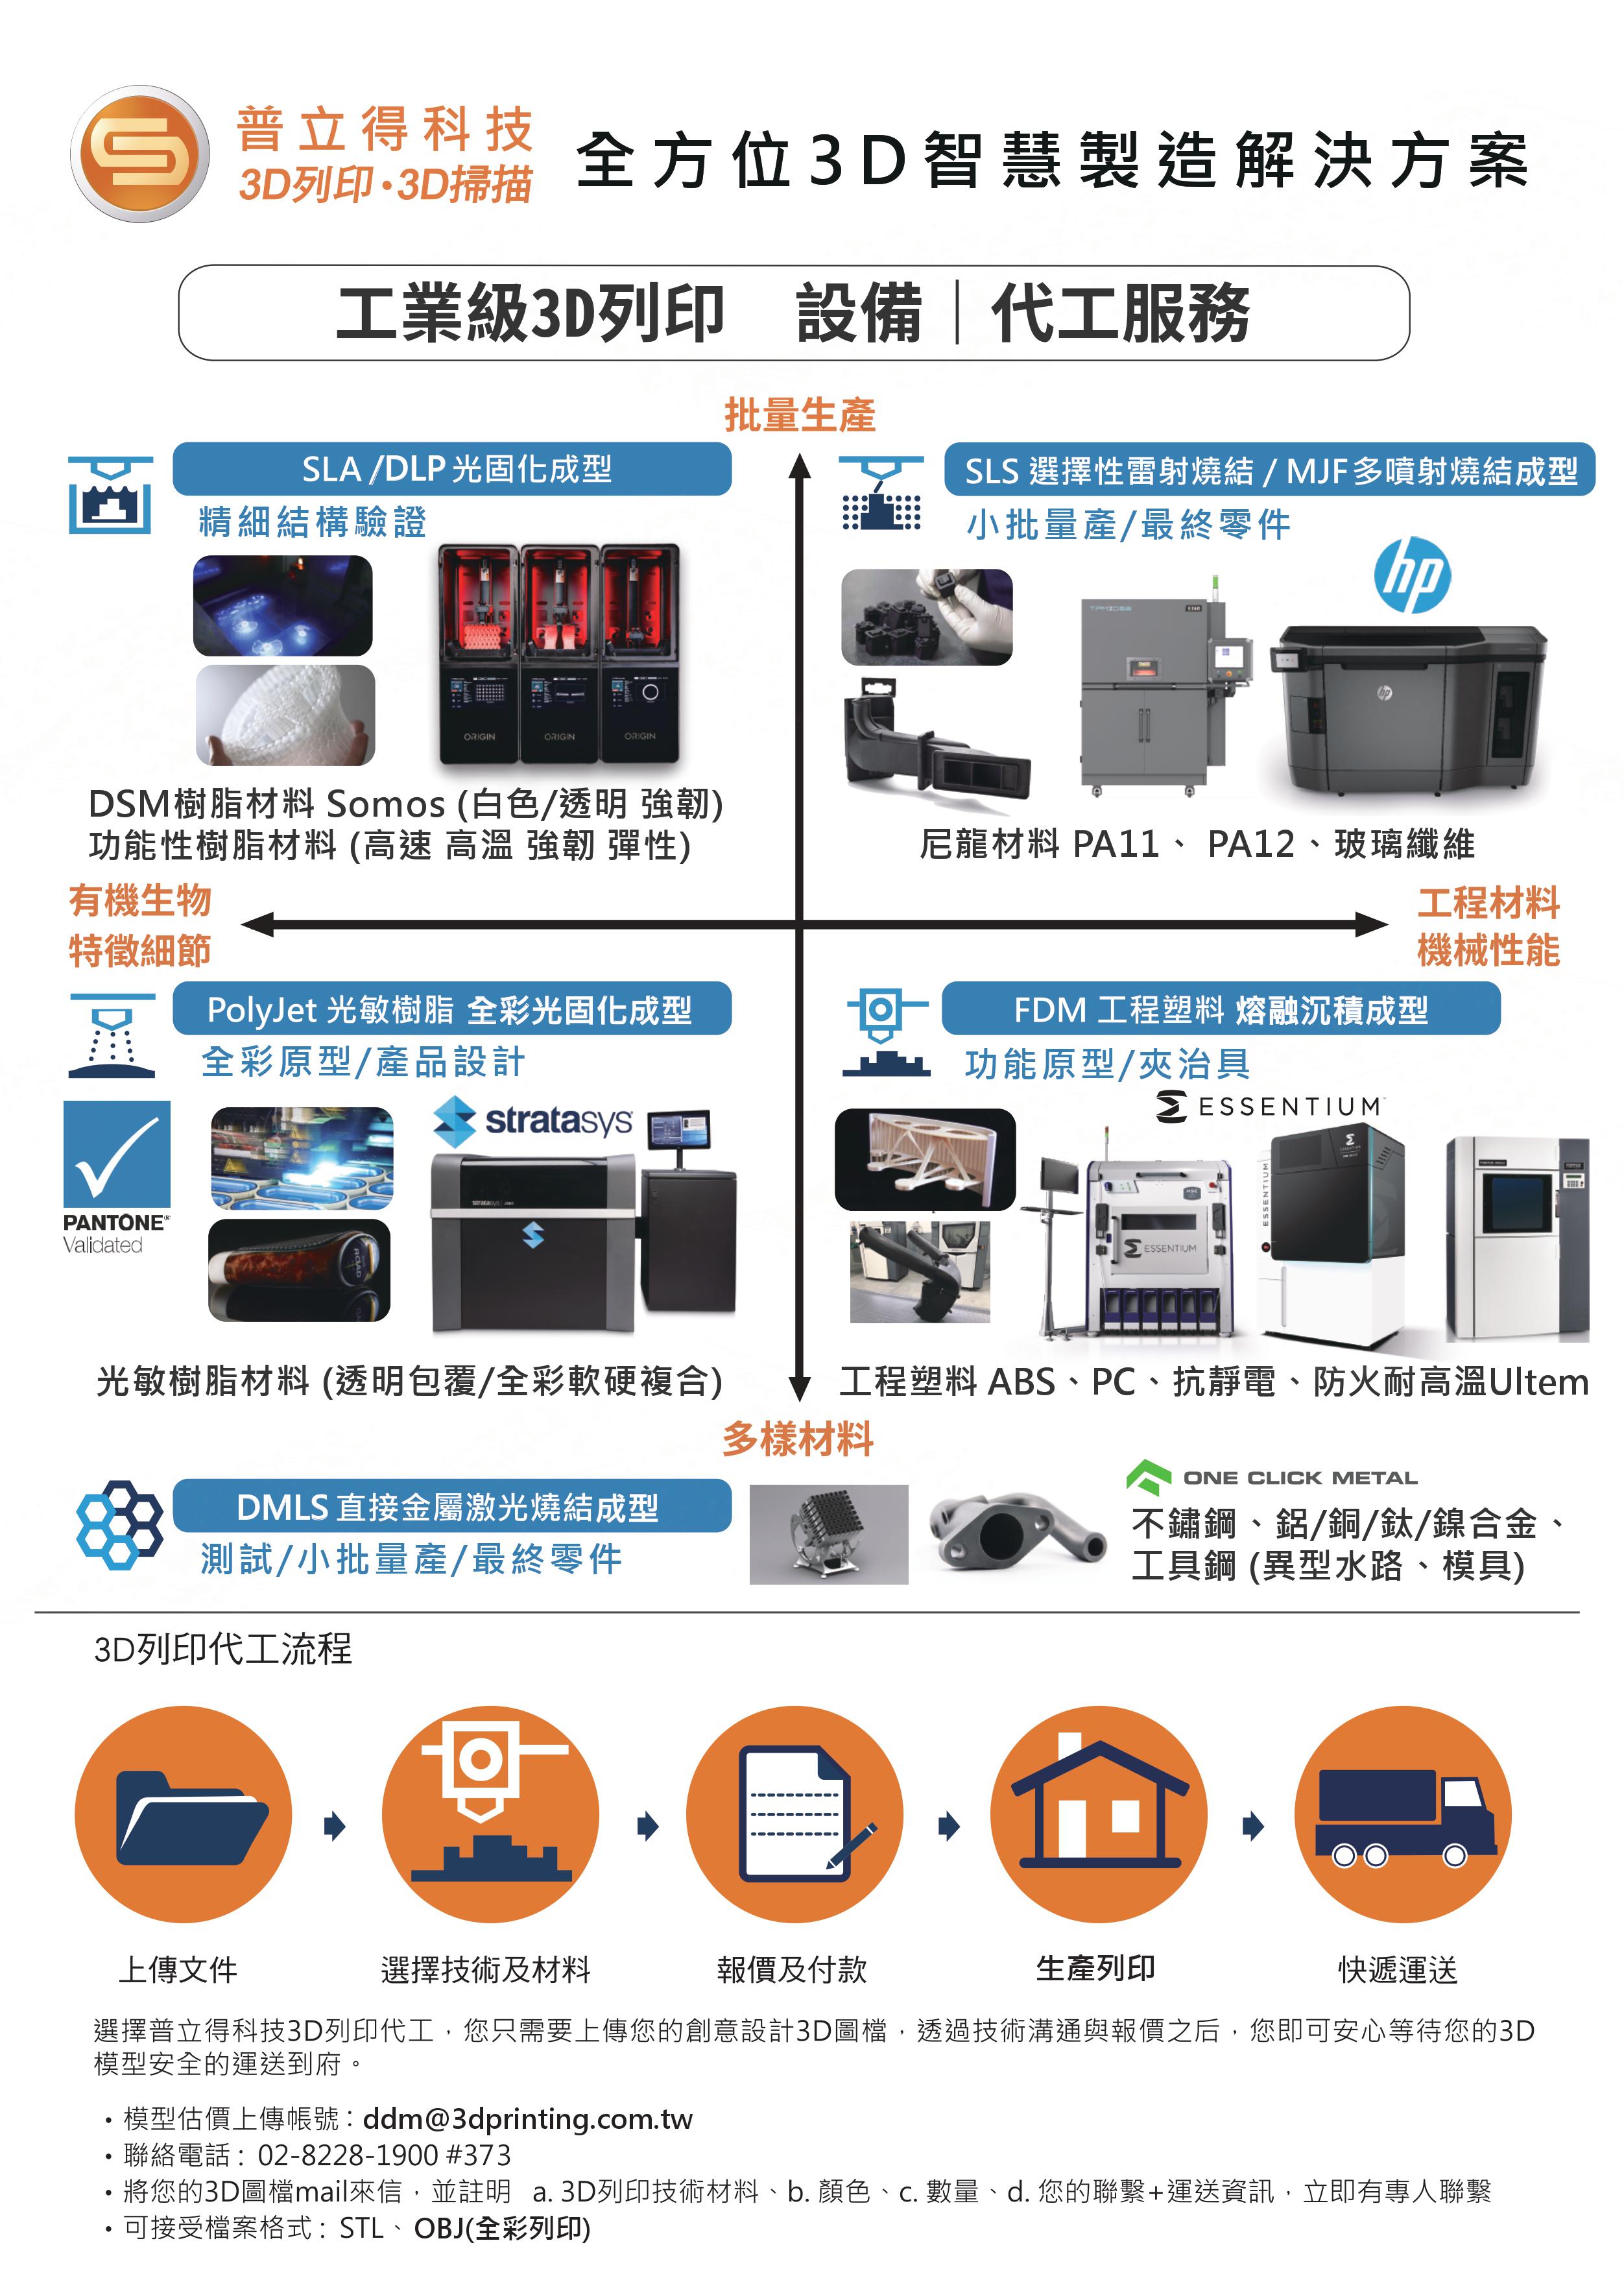 3D Printing Service-OEM